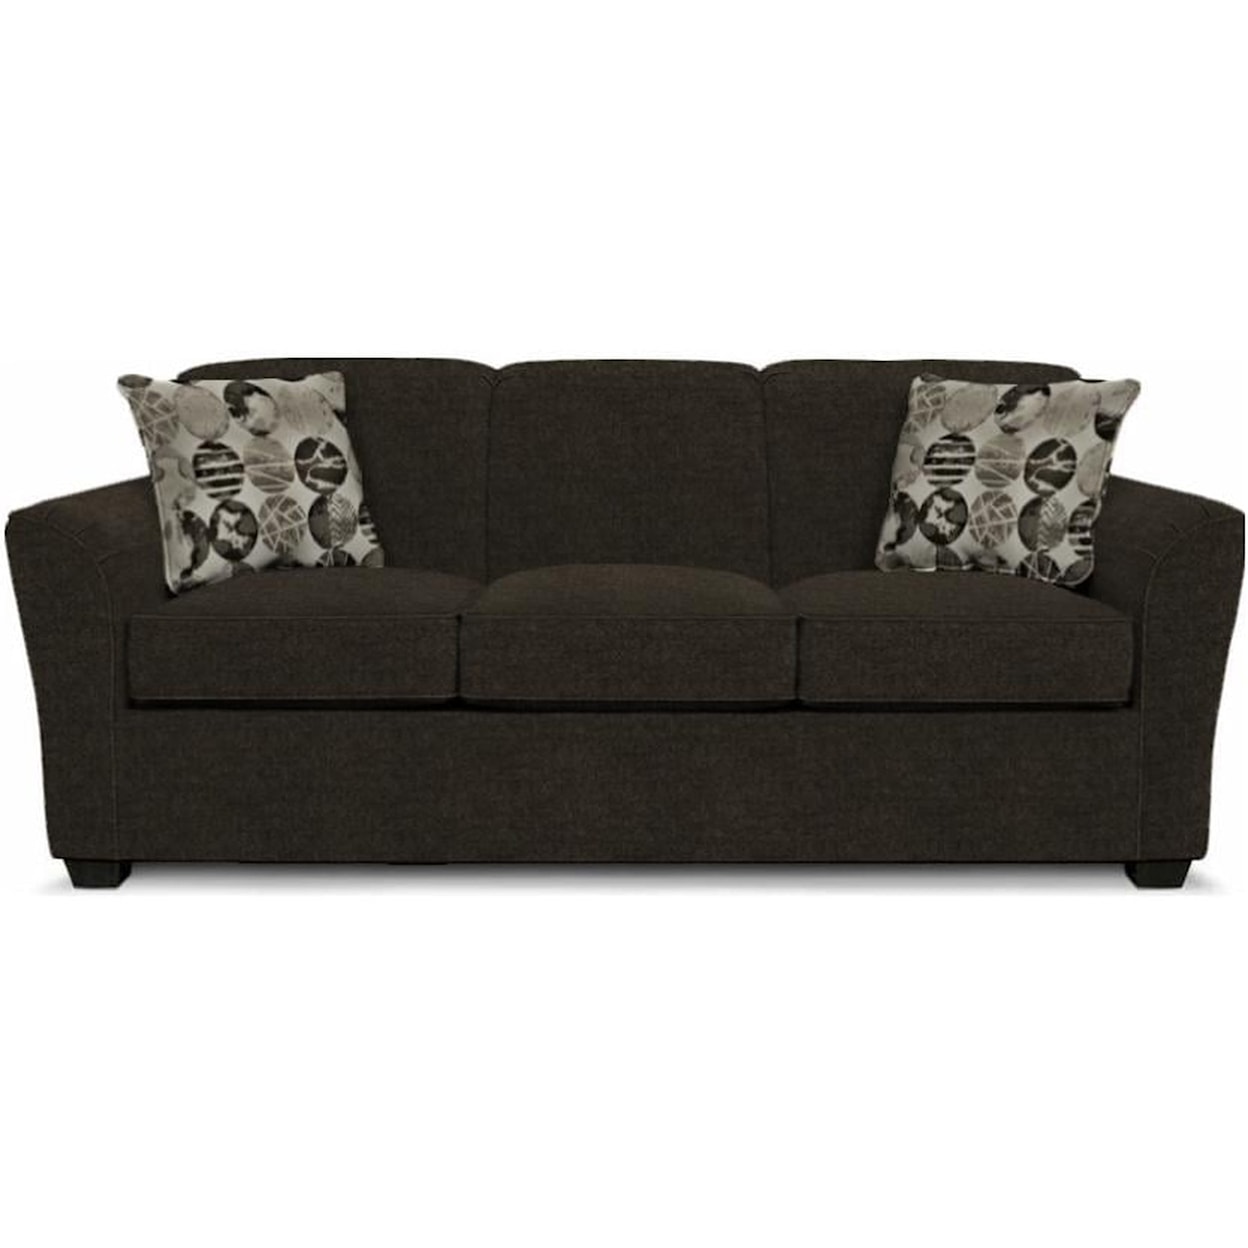 Tennessee Custom Upholstery Ian Queen Sleeper Sofa with Air Mattress